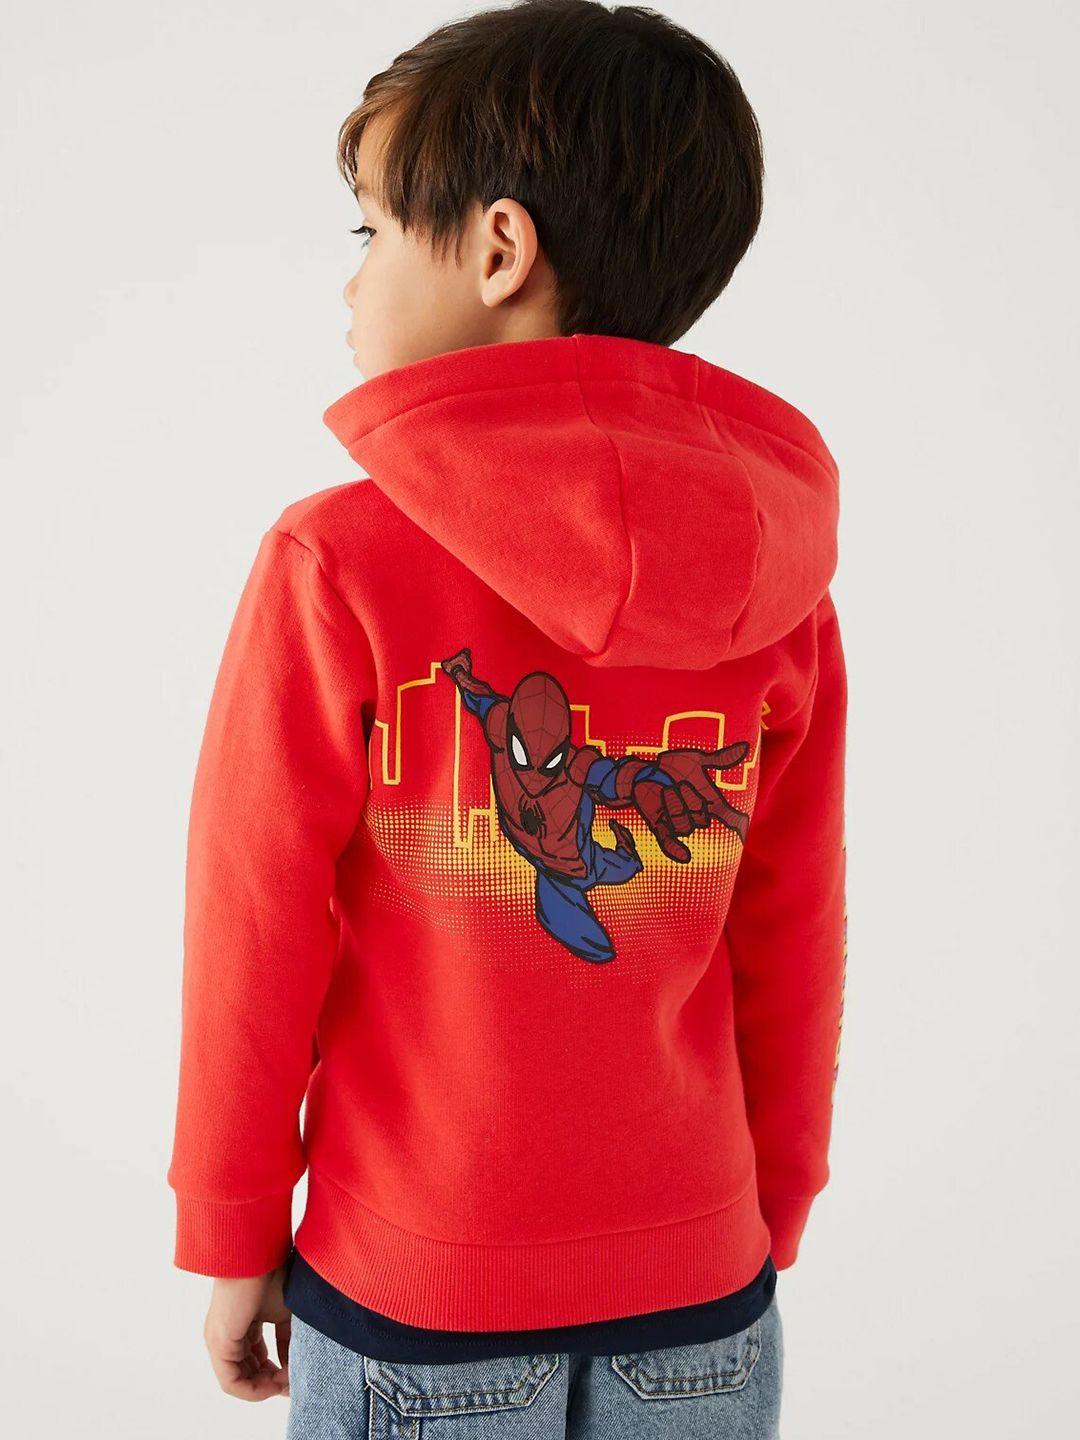 marks & spencer boys spiderman printed sweatshirt